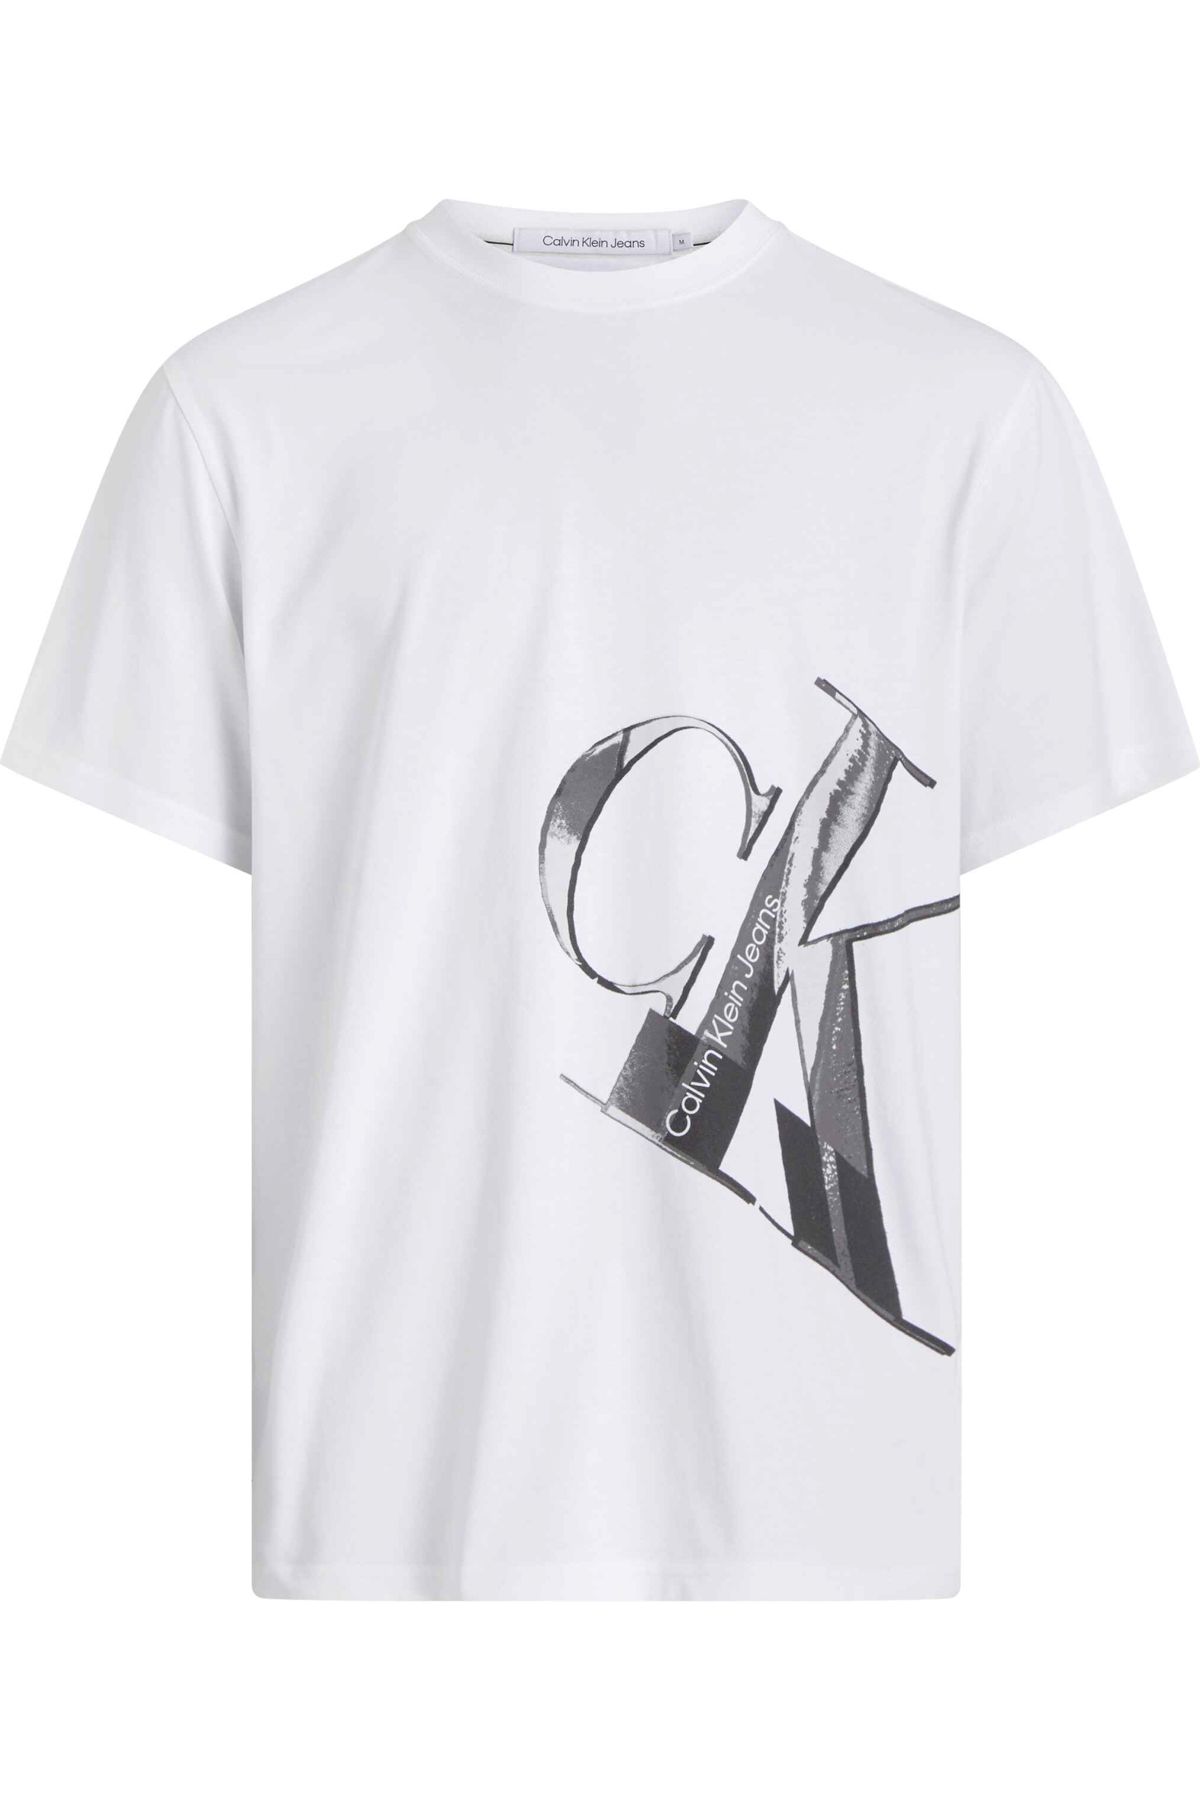 Calvin Klein T-Shirt Men Bright White